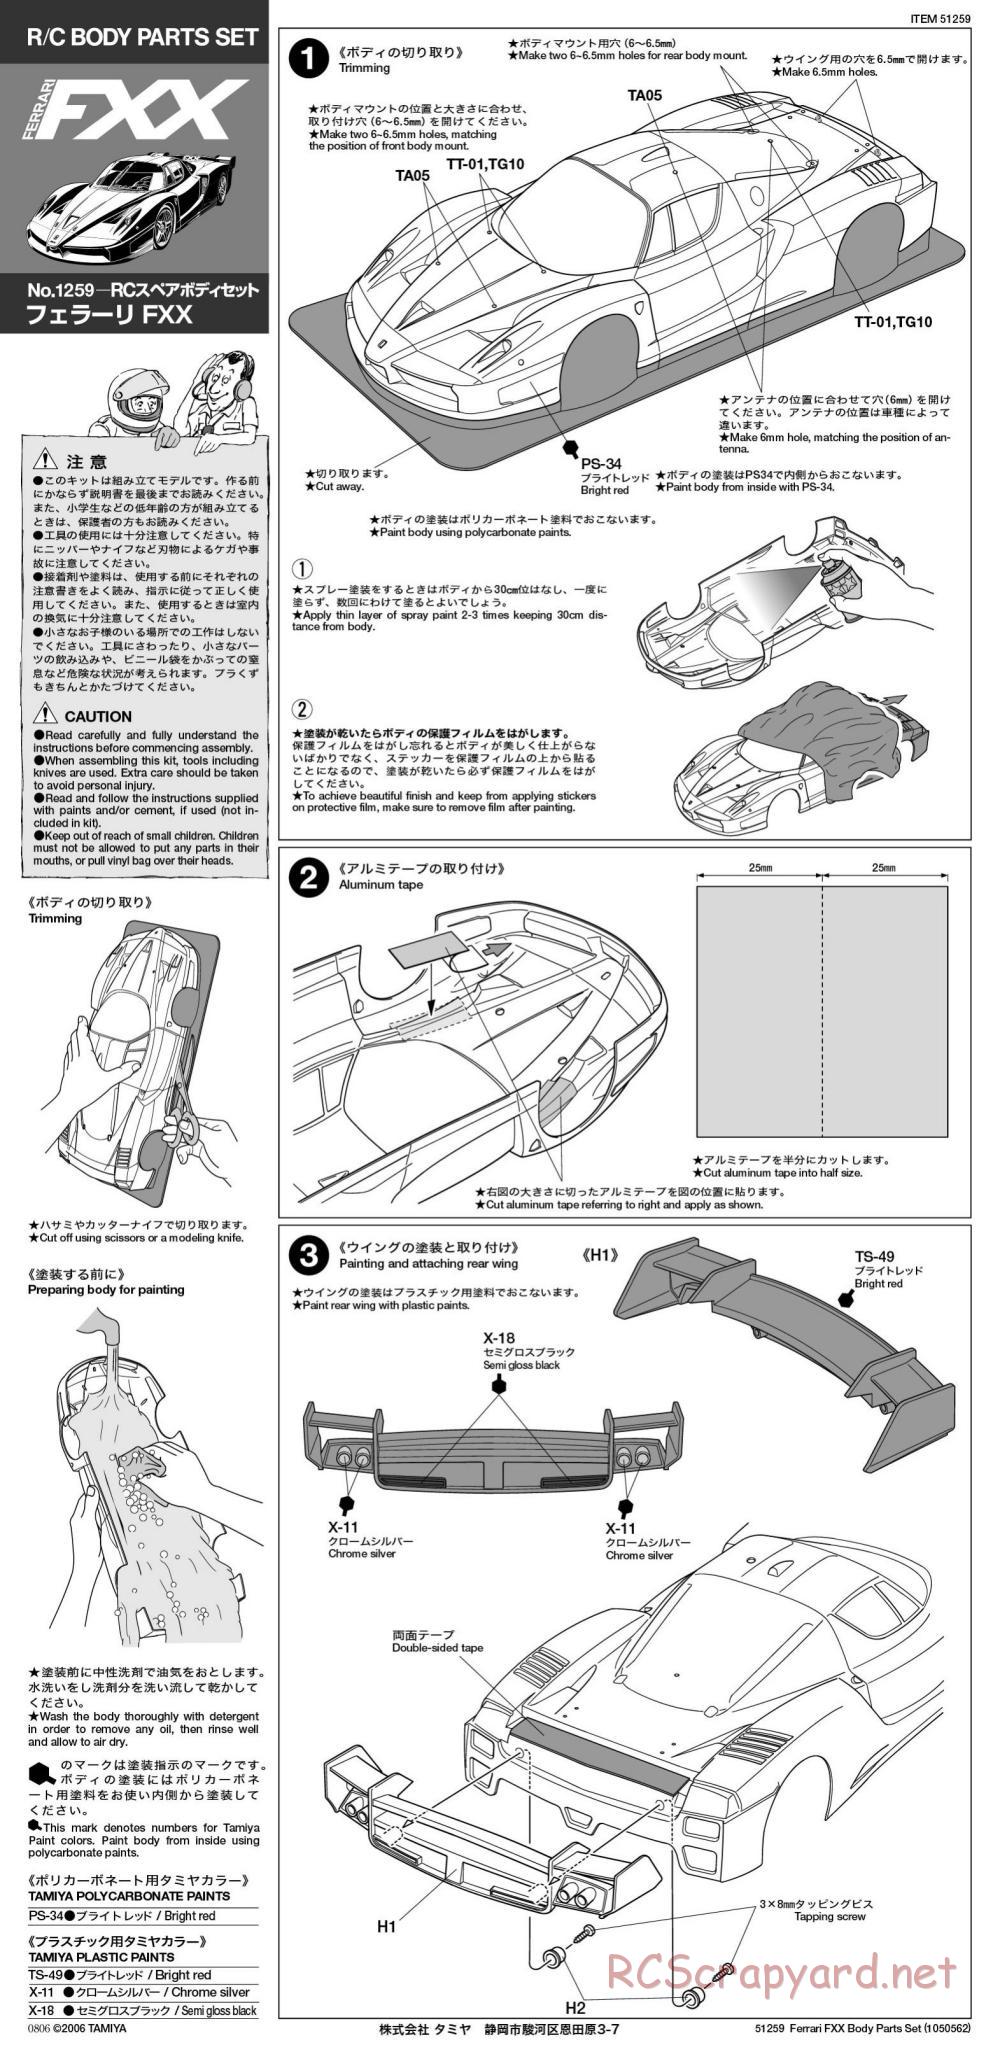 Tamiya - Ferrari FXX - TA05 Chassis - Body Manual - Page 1